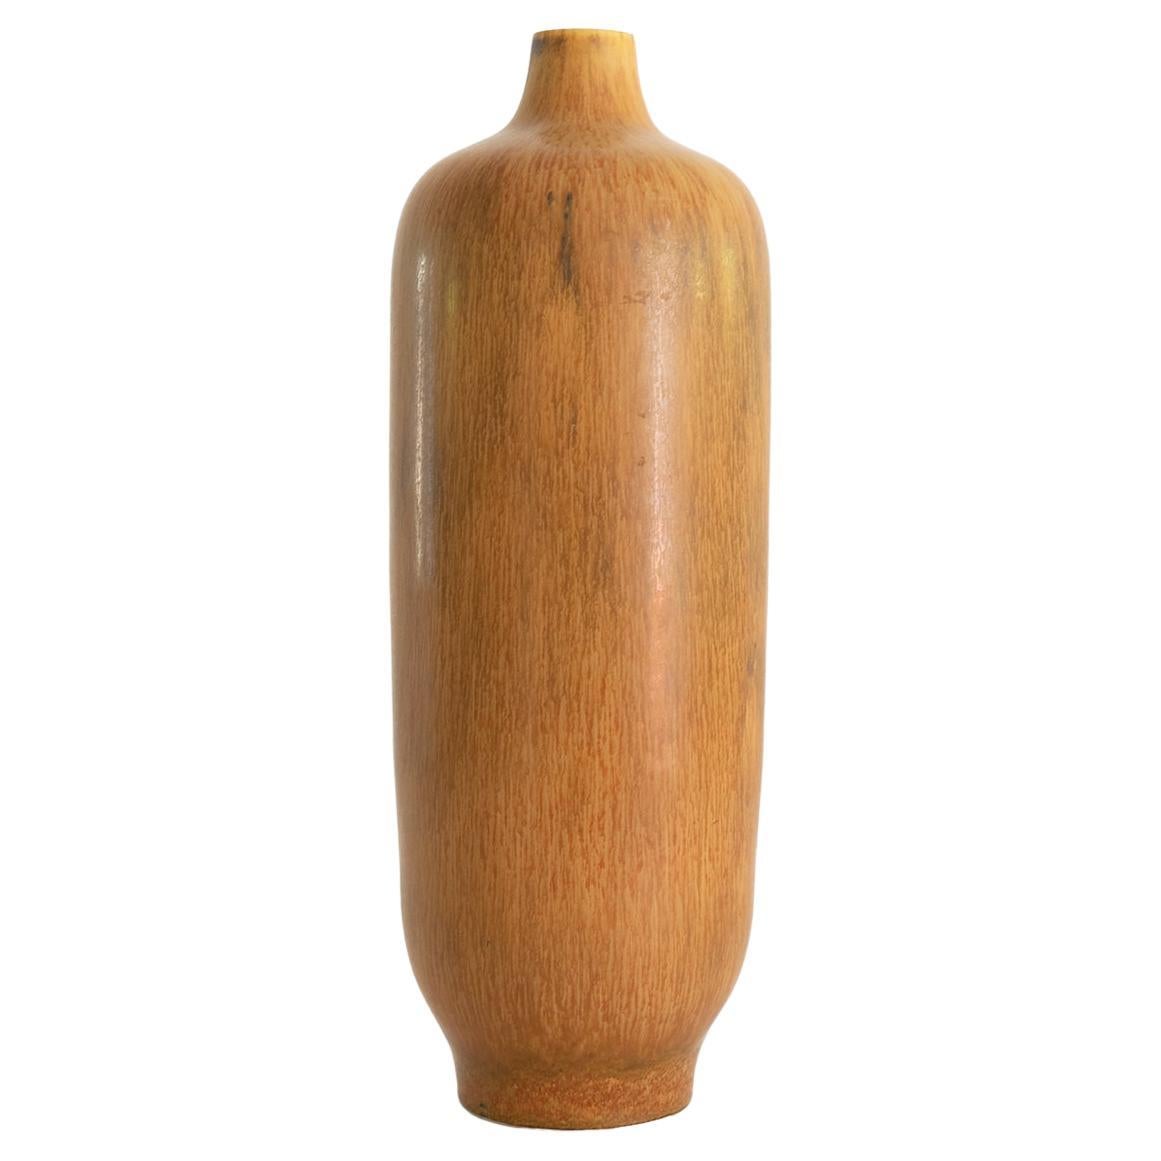  Carl-Harry Stålhane amber colored Hare’s-Fur” glazed vase made at Rorstrand For Sale